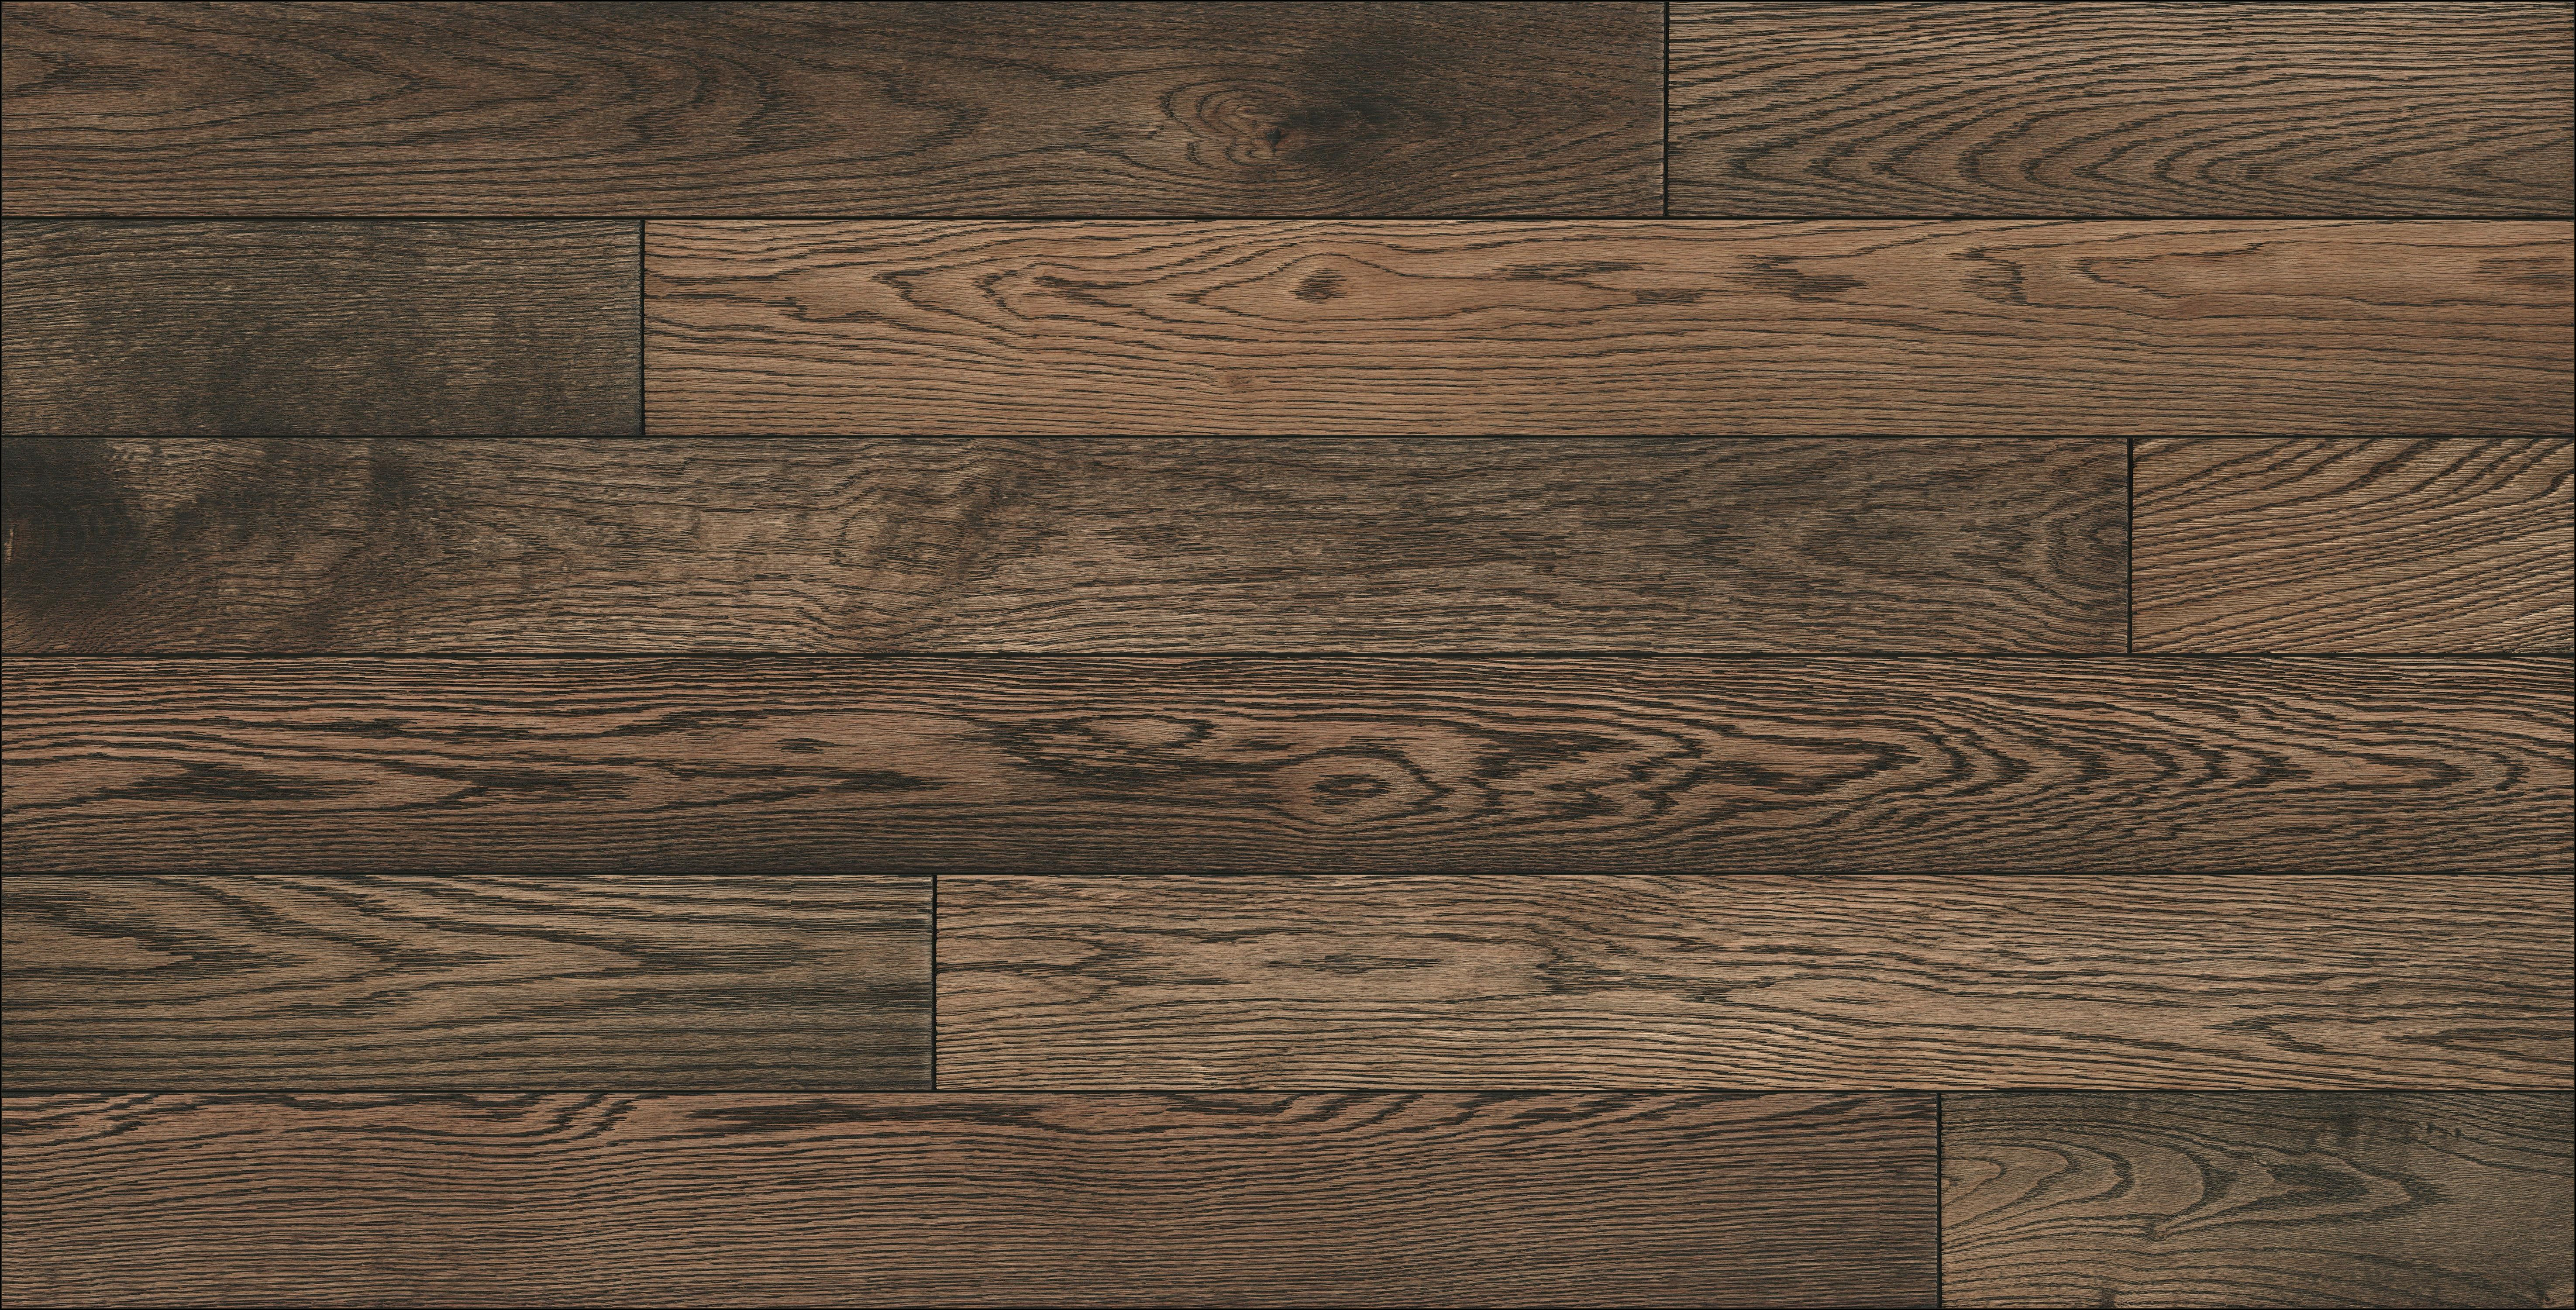 3 8 solid hardwood flooring of wide plank flooring ideas for wide plank white oak wood flooring timber hardwood wheat 5 wide solid hardwood flooring of